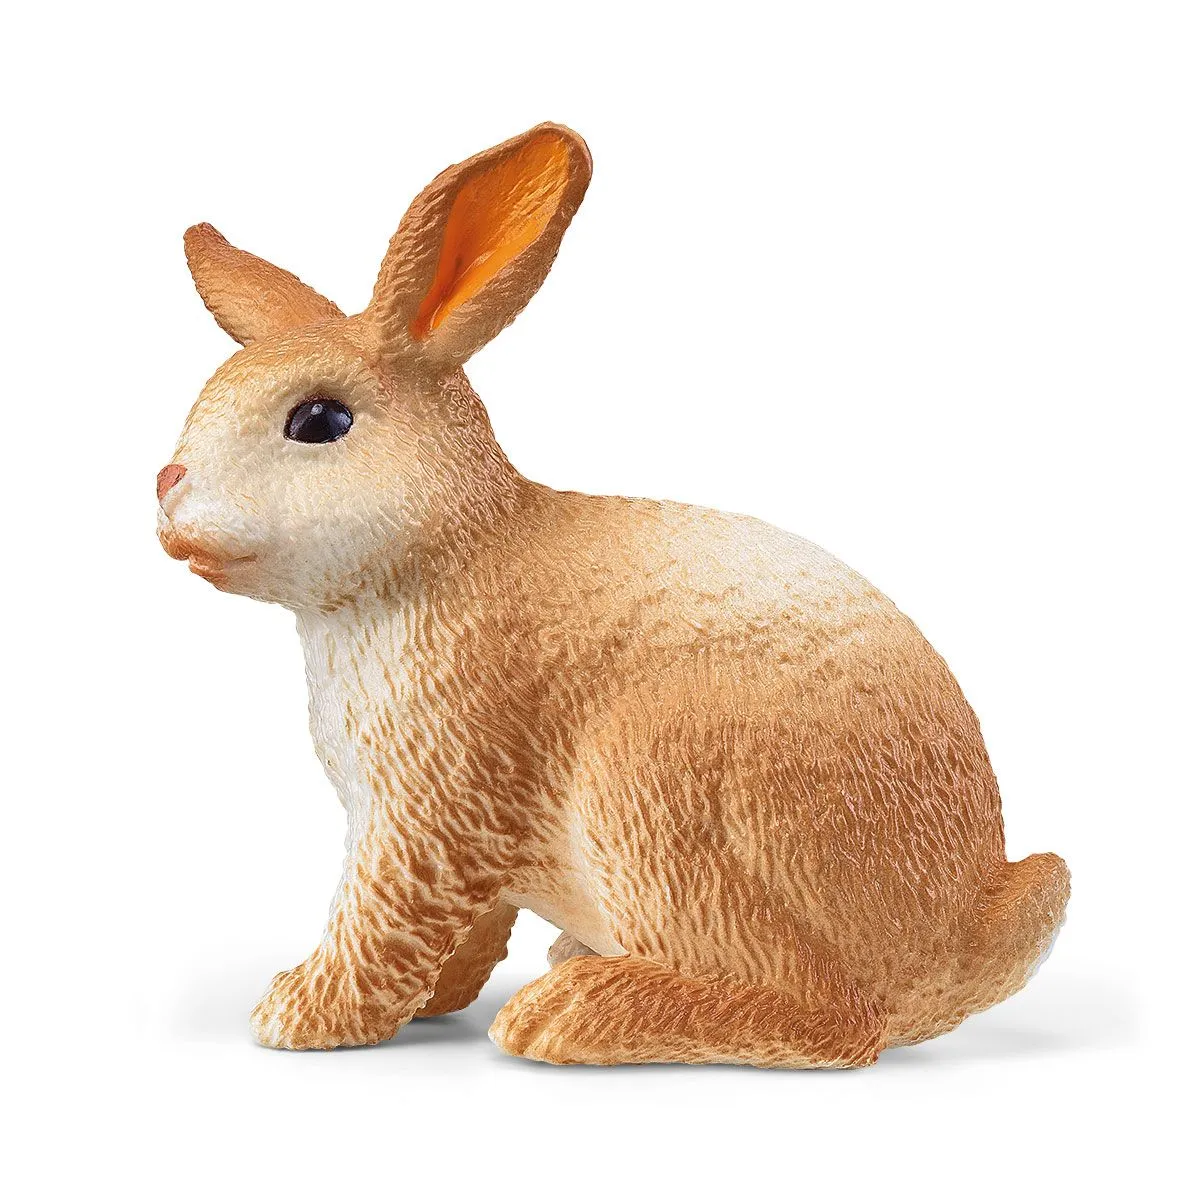 Happy Harry - Kaninchen orange - Oster Special limitiert (72187)